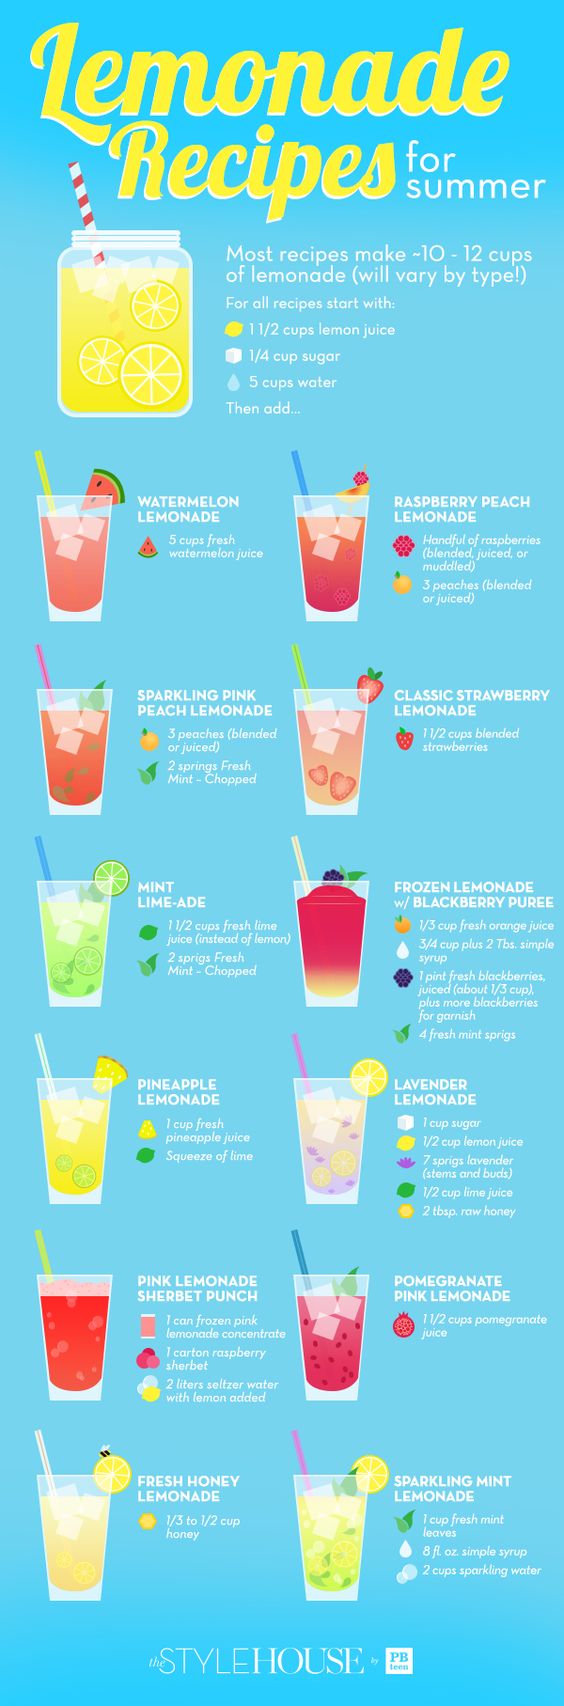 lemonade recipes for summer